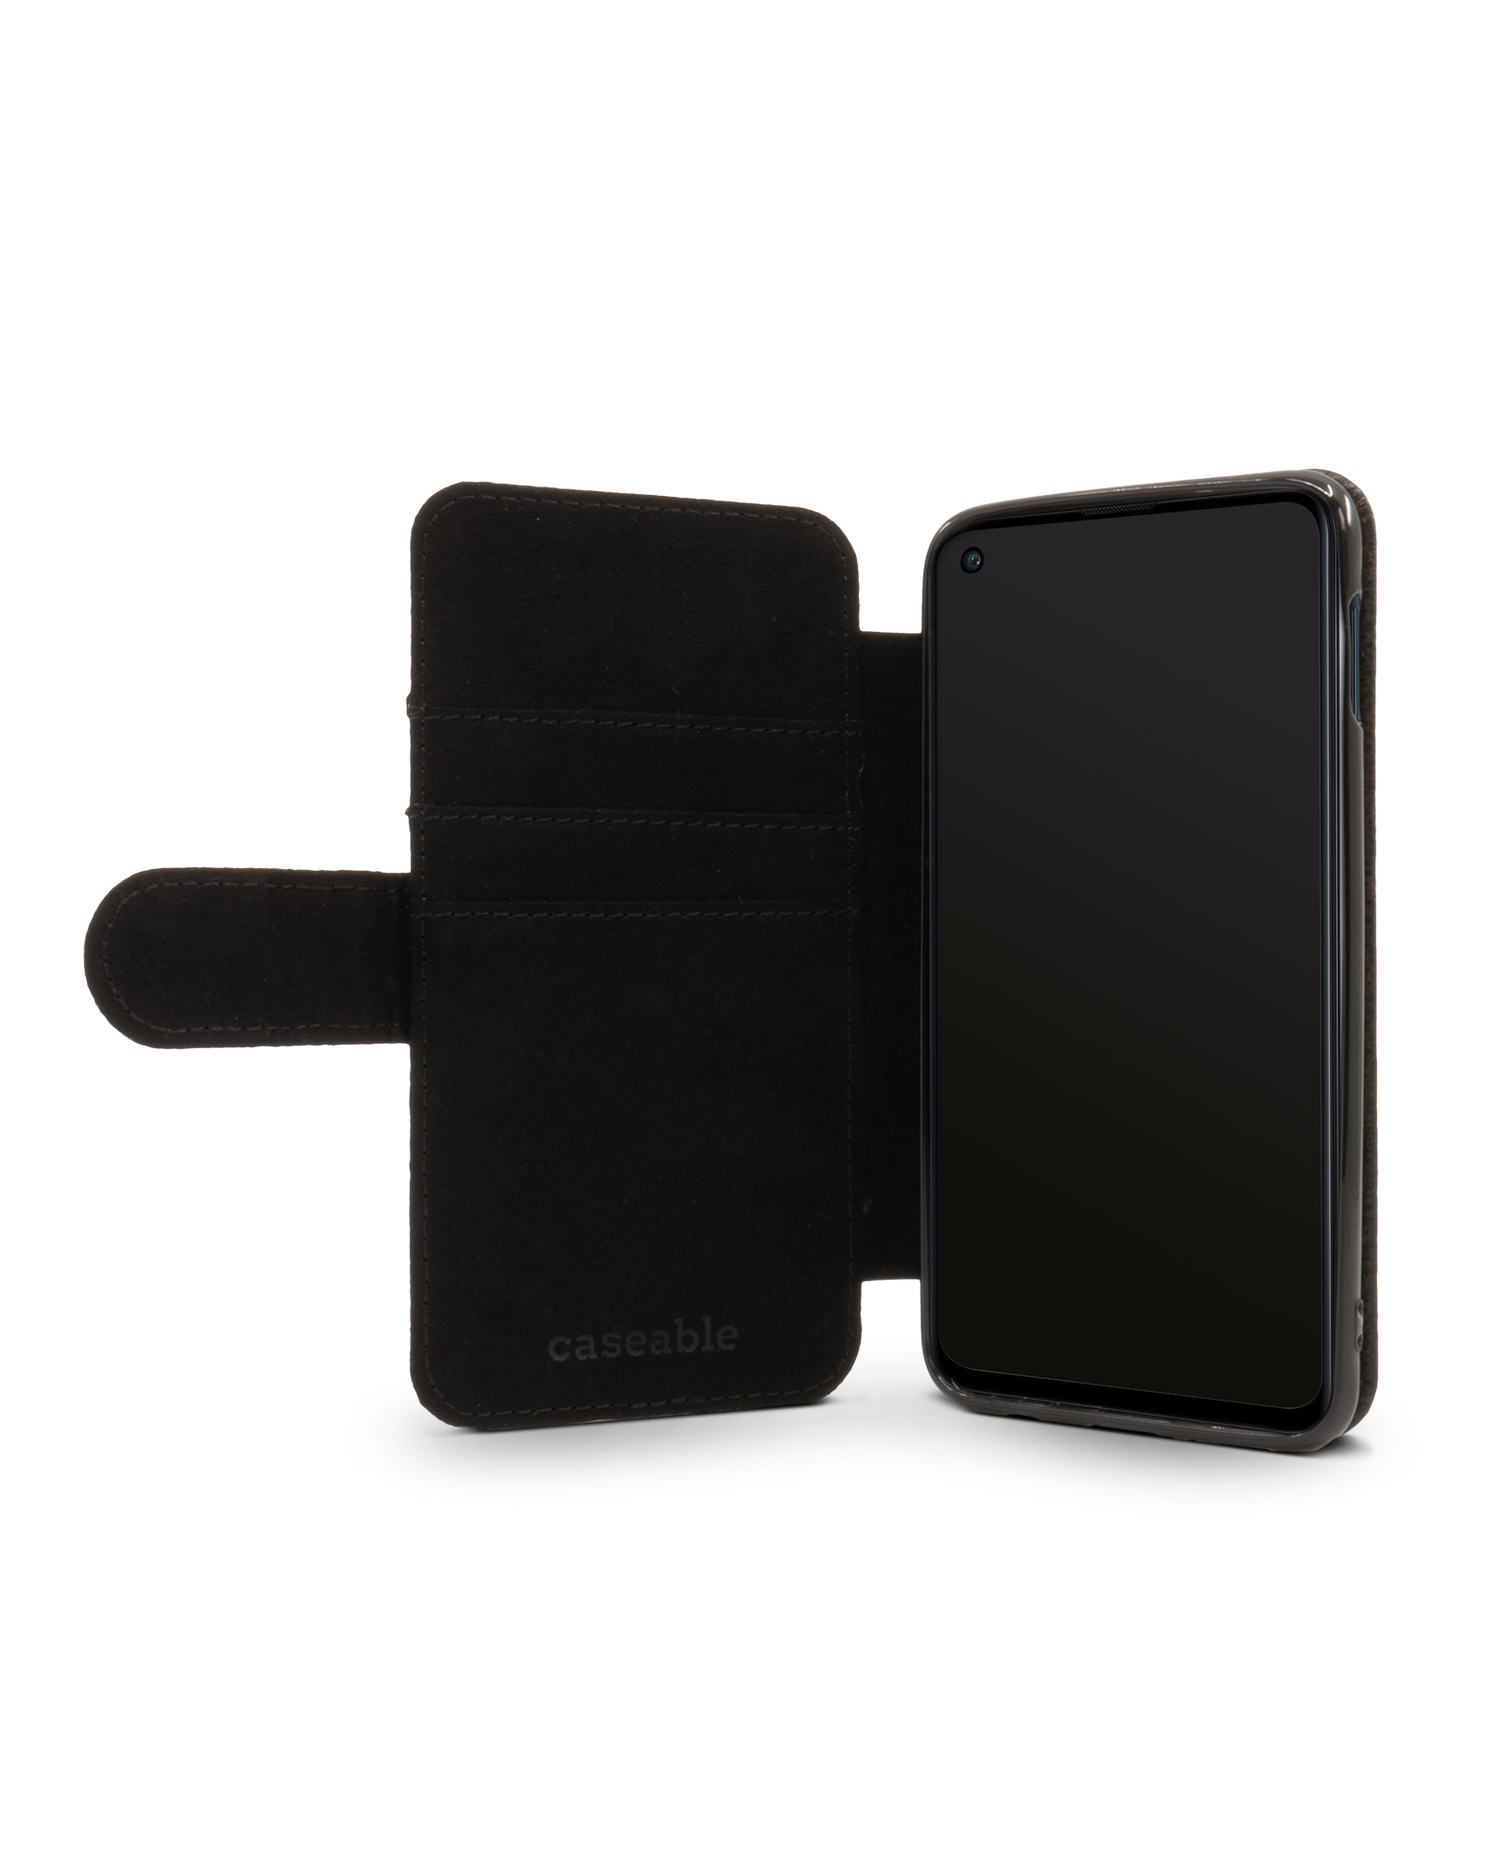 Electric Ocean 2 Wallet Phone Case Samsung Galaxy S10e: Inside View